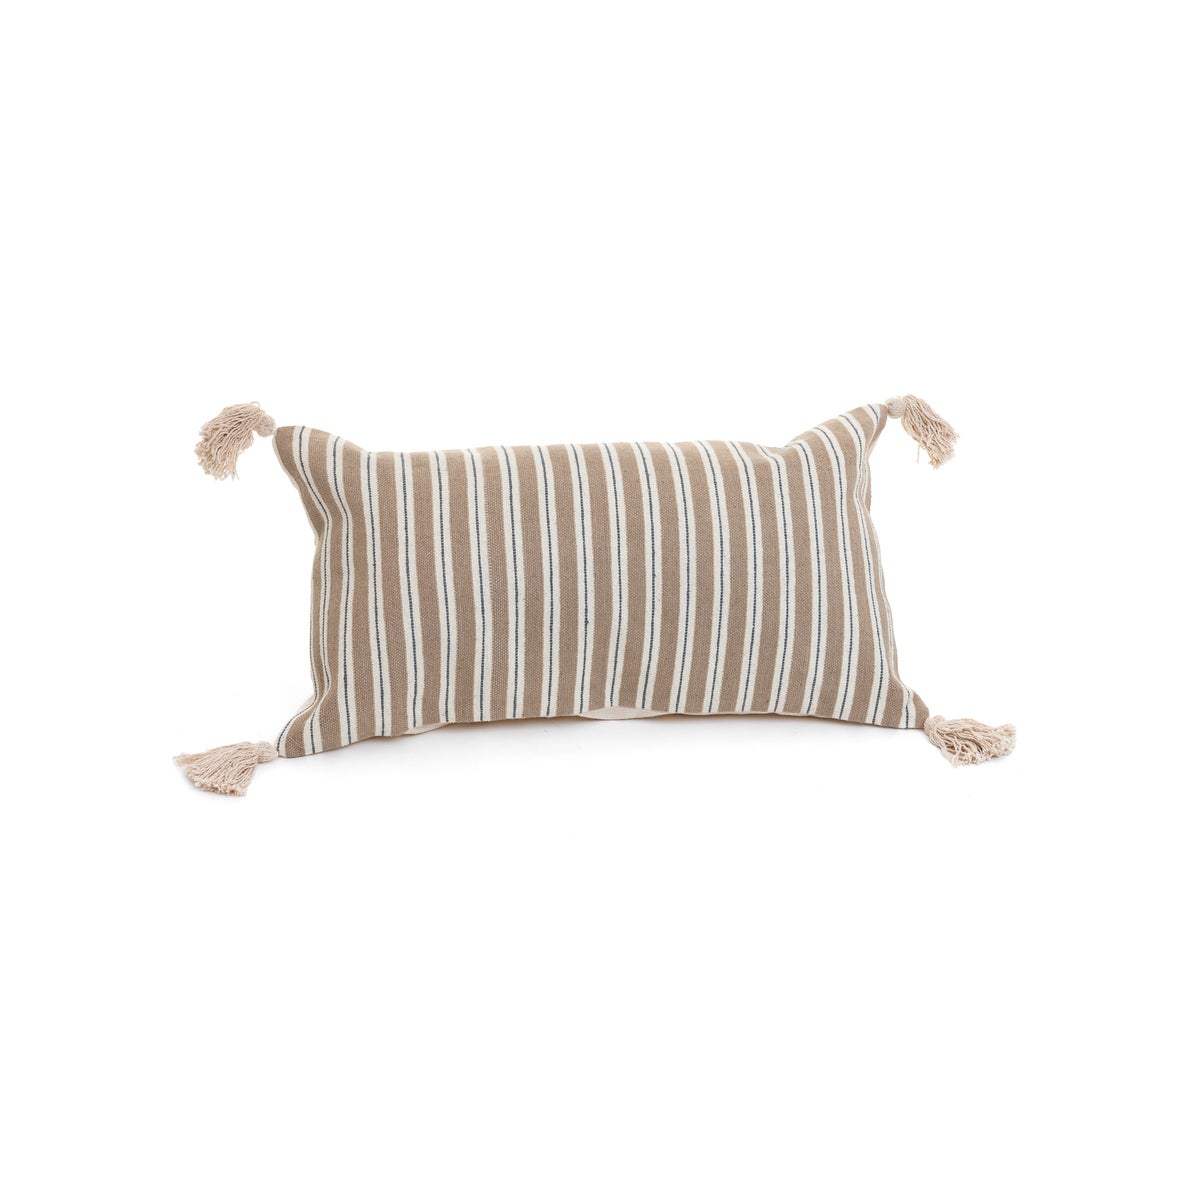 Cushion - Woven Stripes (long)